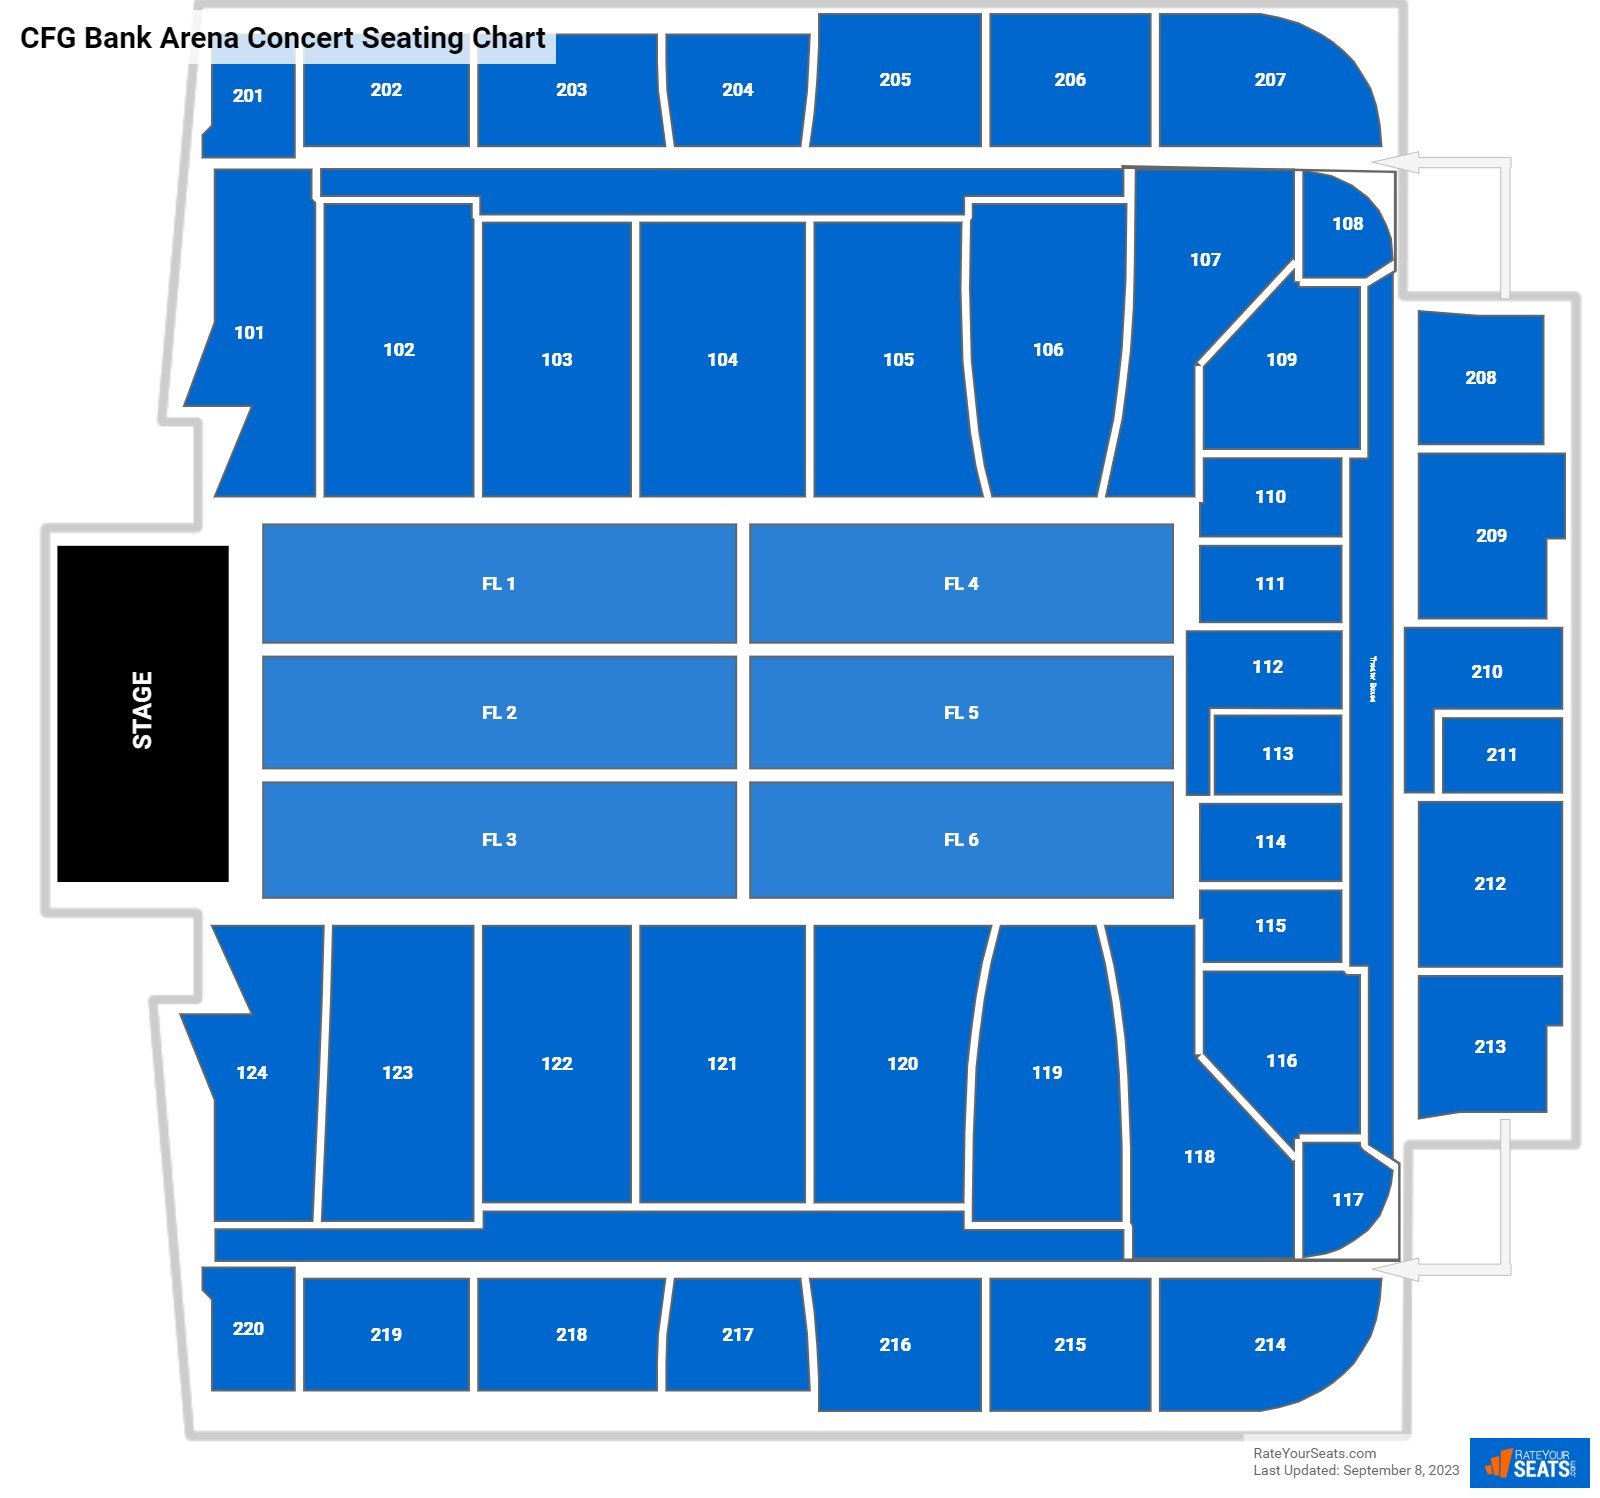 CFG Bank Arena Concert Seating Chart